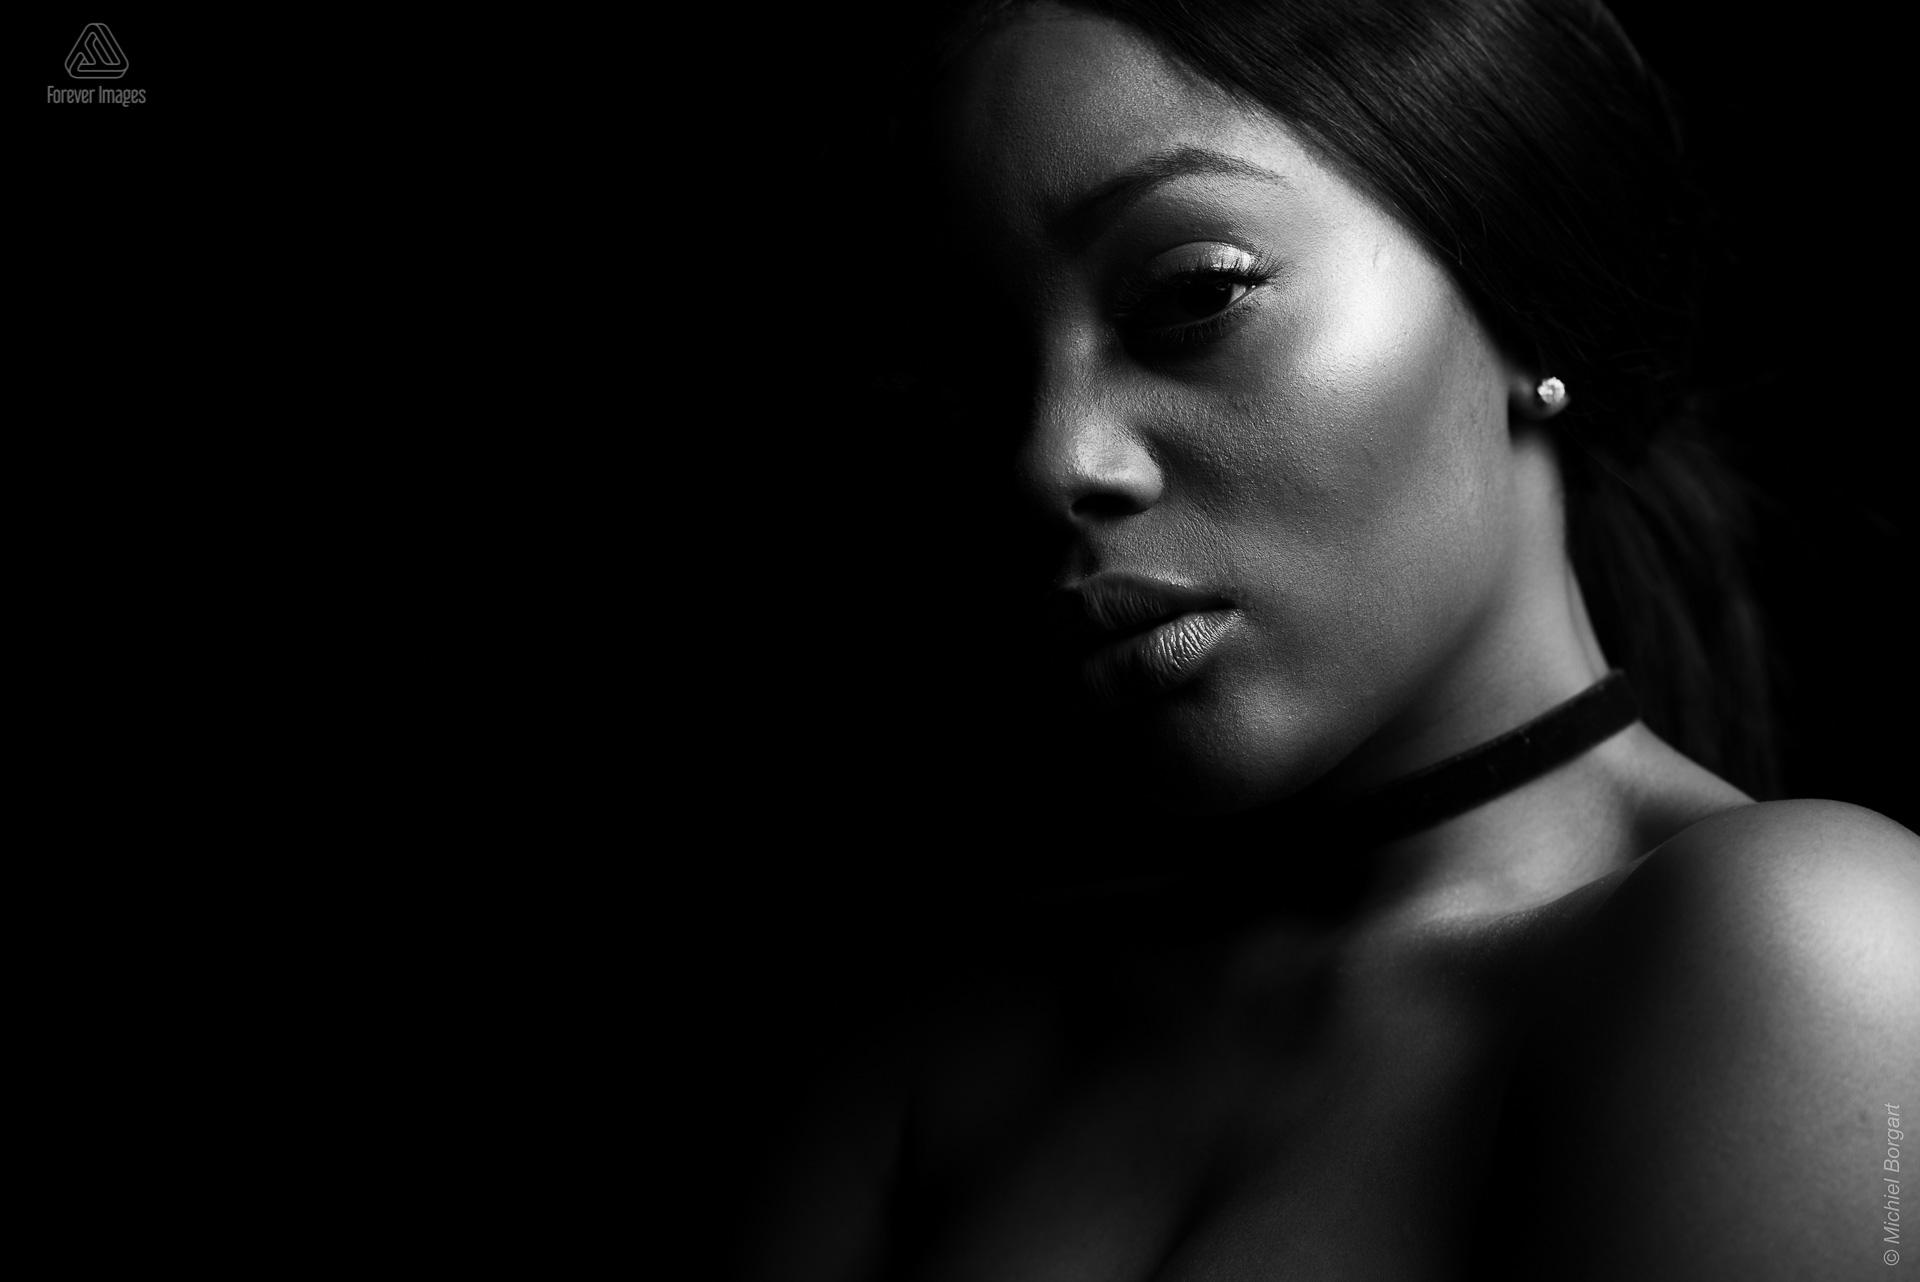 Portretfoto zwart-wit glamourshoot chocker kijkend in camera low key | Mariana Pietersz Natasha Mondesir | Portretfotograaf Michiel Borgart - Forever Images.